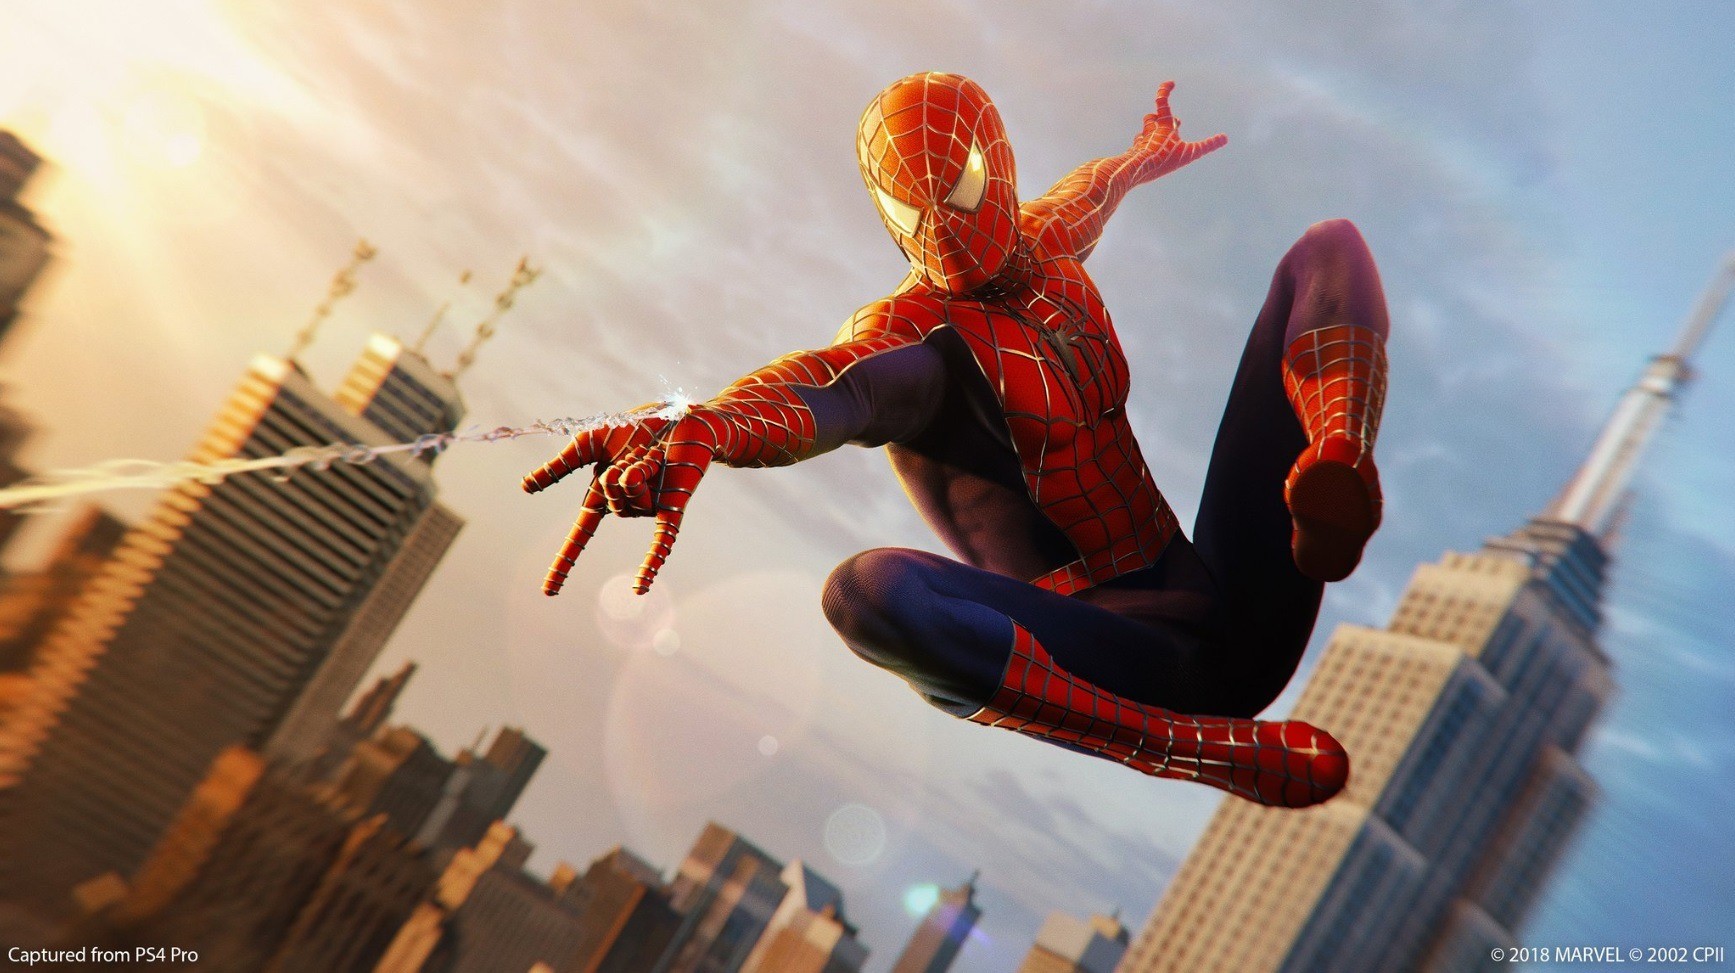 Obrázok z hry Marvel's Spider-Man na PlayStation 4